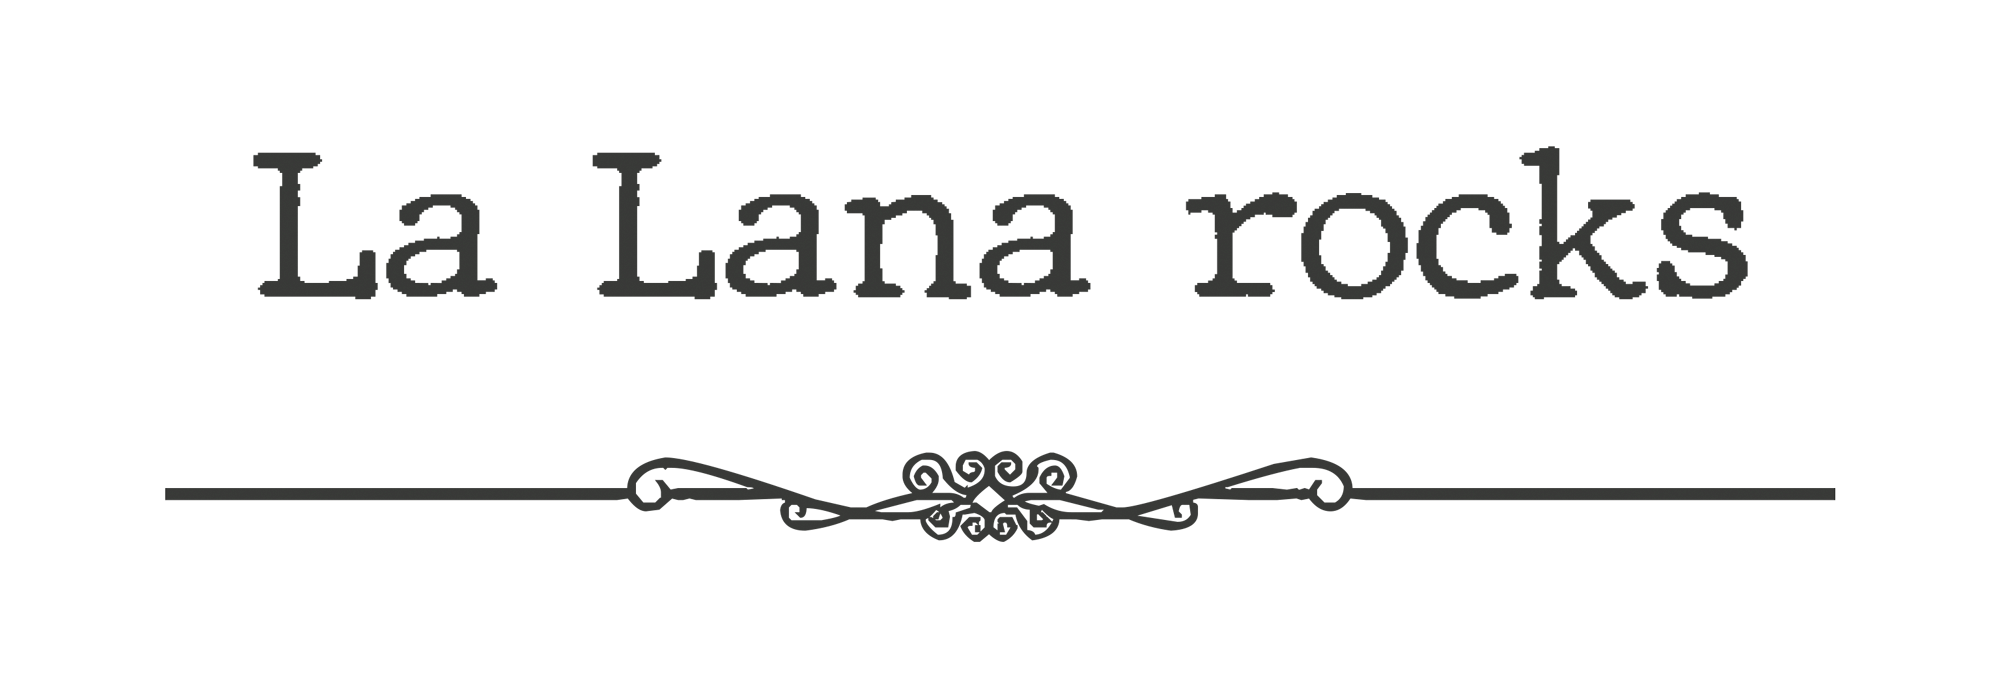 La-Lana-rocks